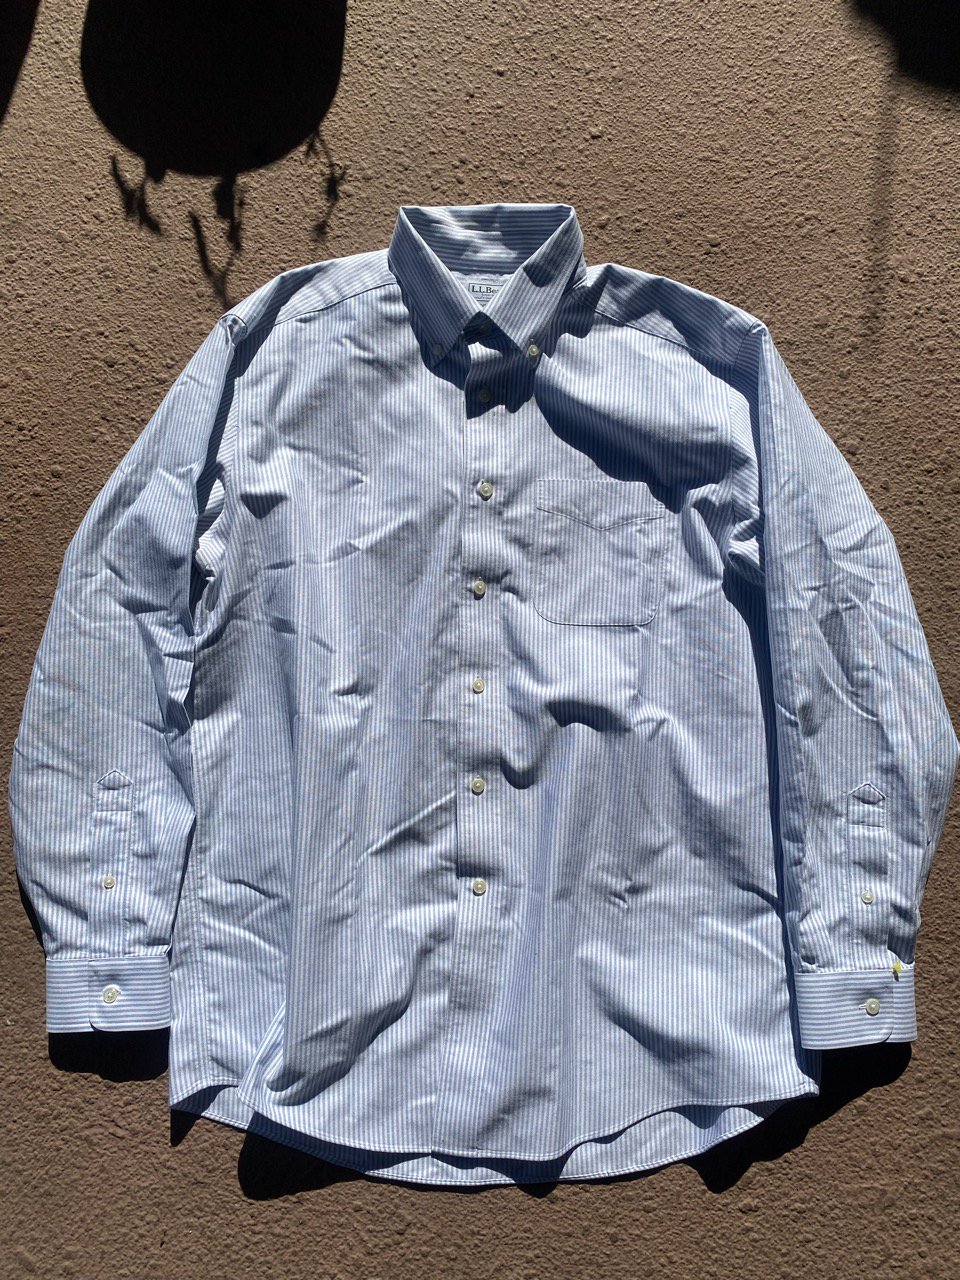 L.L.Bean Long sleeve shirts -used- men's 16-34  Men's XL/2XL(?)